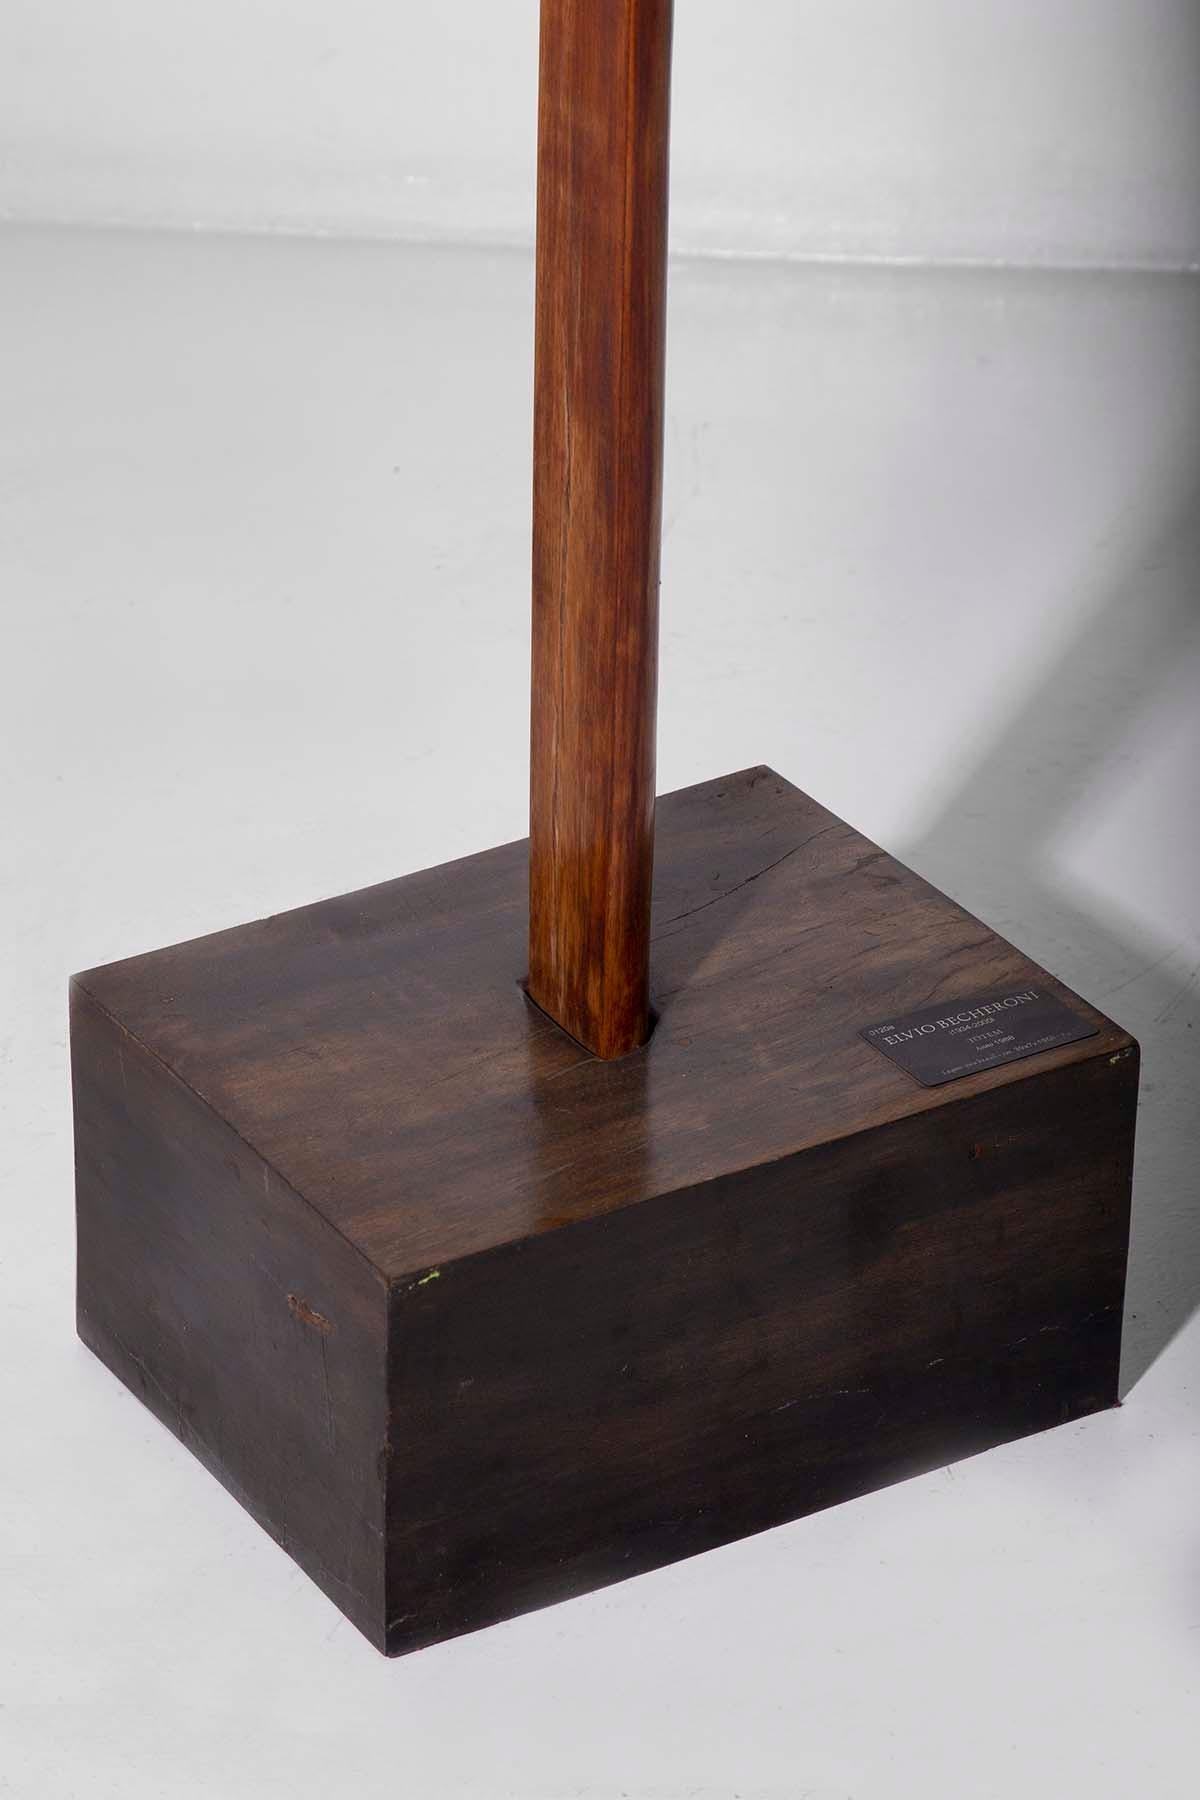 Postmoderne Elvio Becheroni Sculpture abstraite en bois : Titre Totem en vente